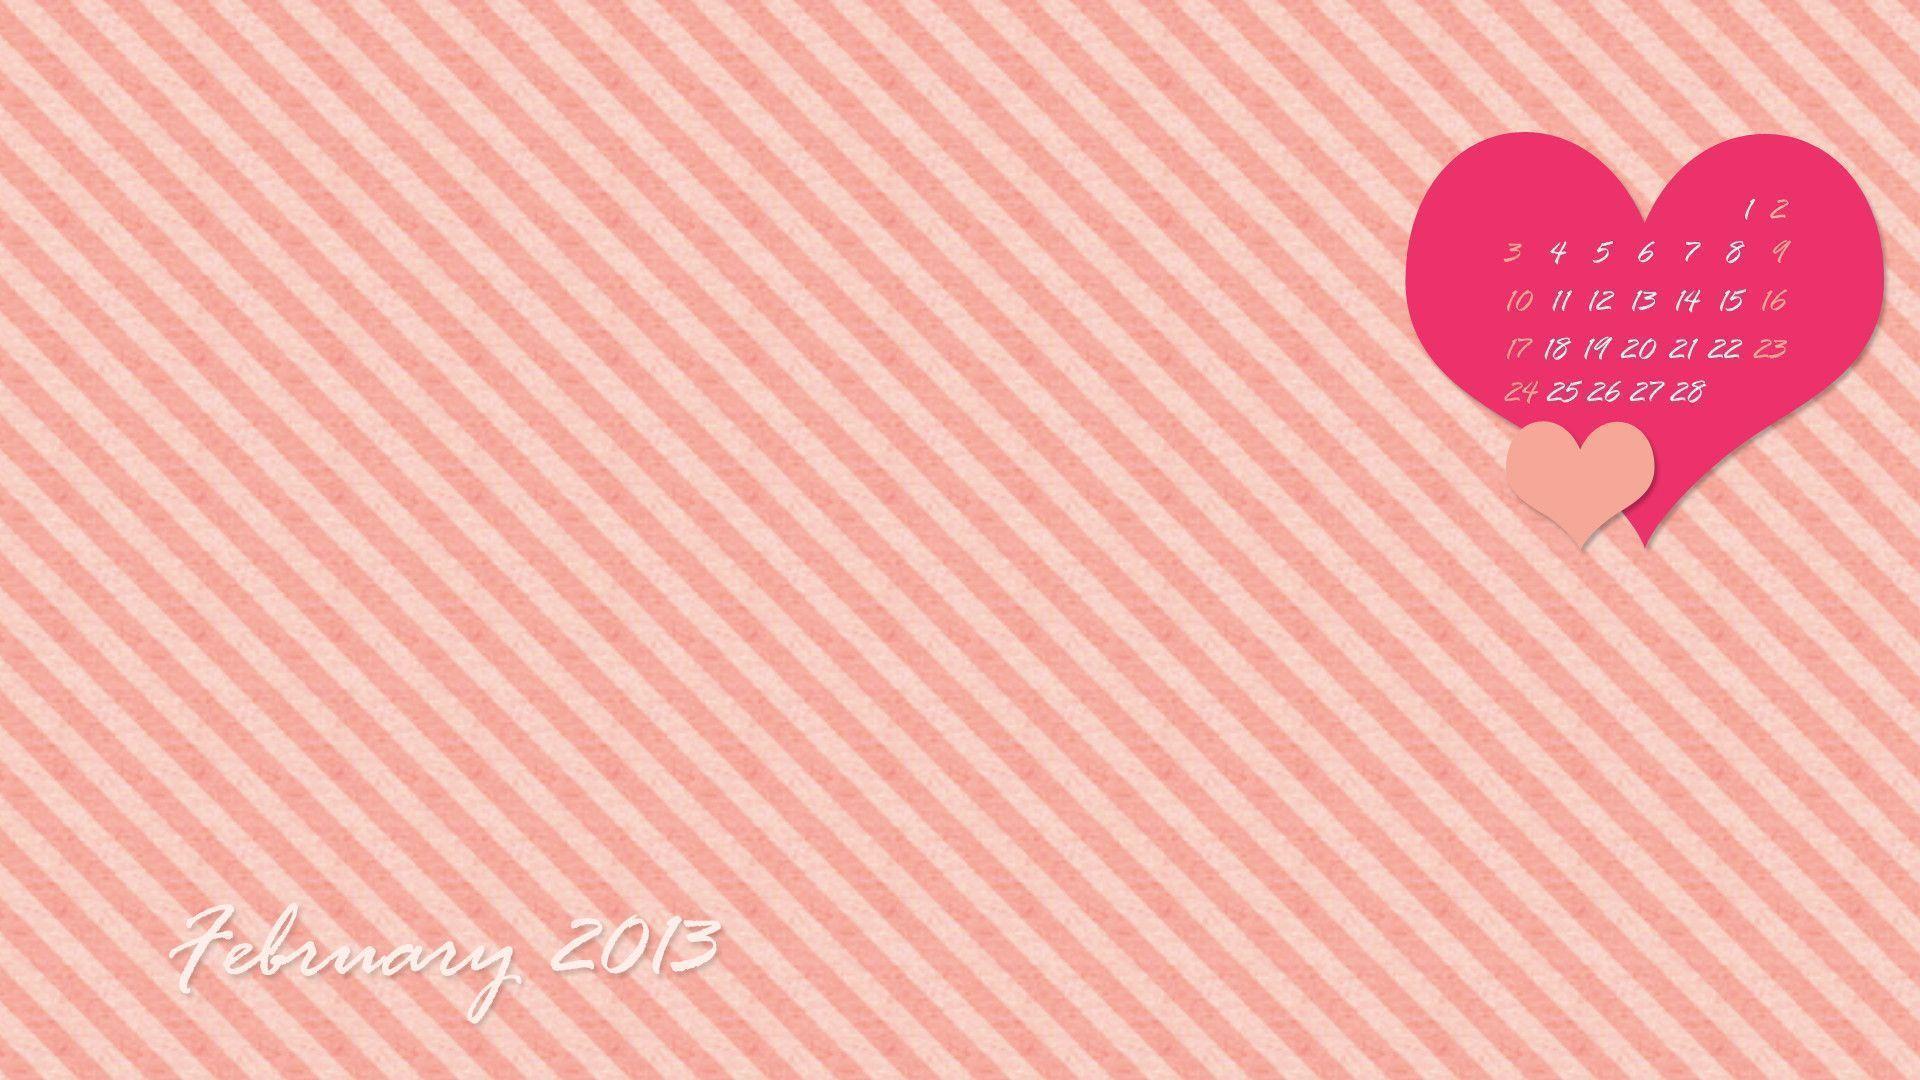 February Valentines Wallpaper, iPad Wallpaper & Facebook Cover Photo!